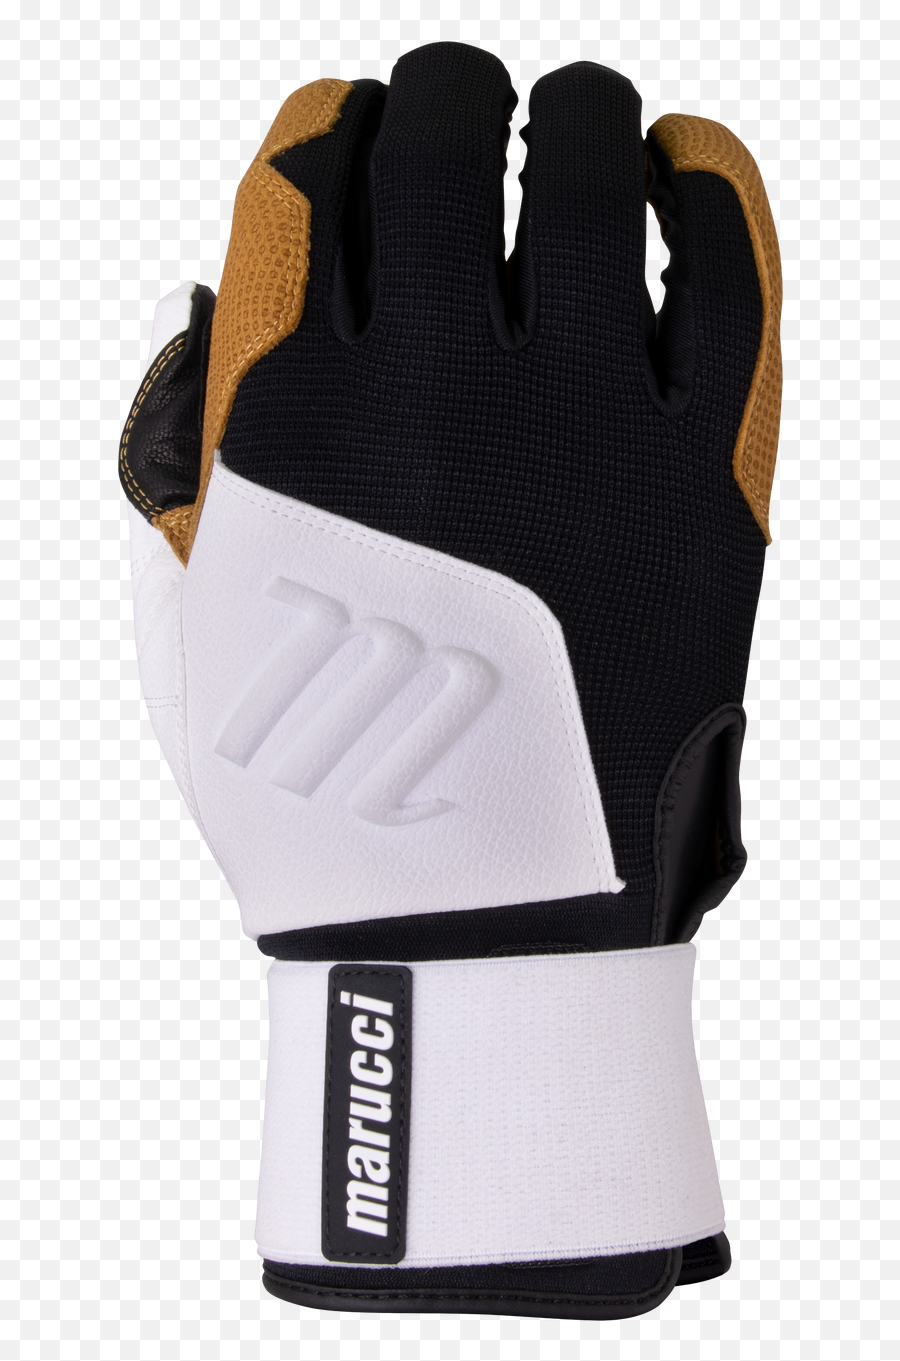 Marucci Blacksmith Full Wrap Batting Gloves Adult - Marucci Batting Gloves Png,Blacksmith Icon